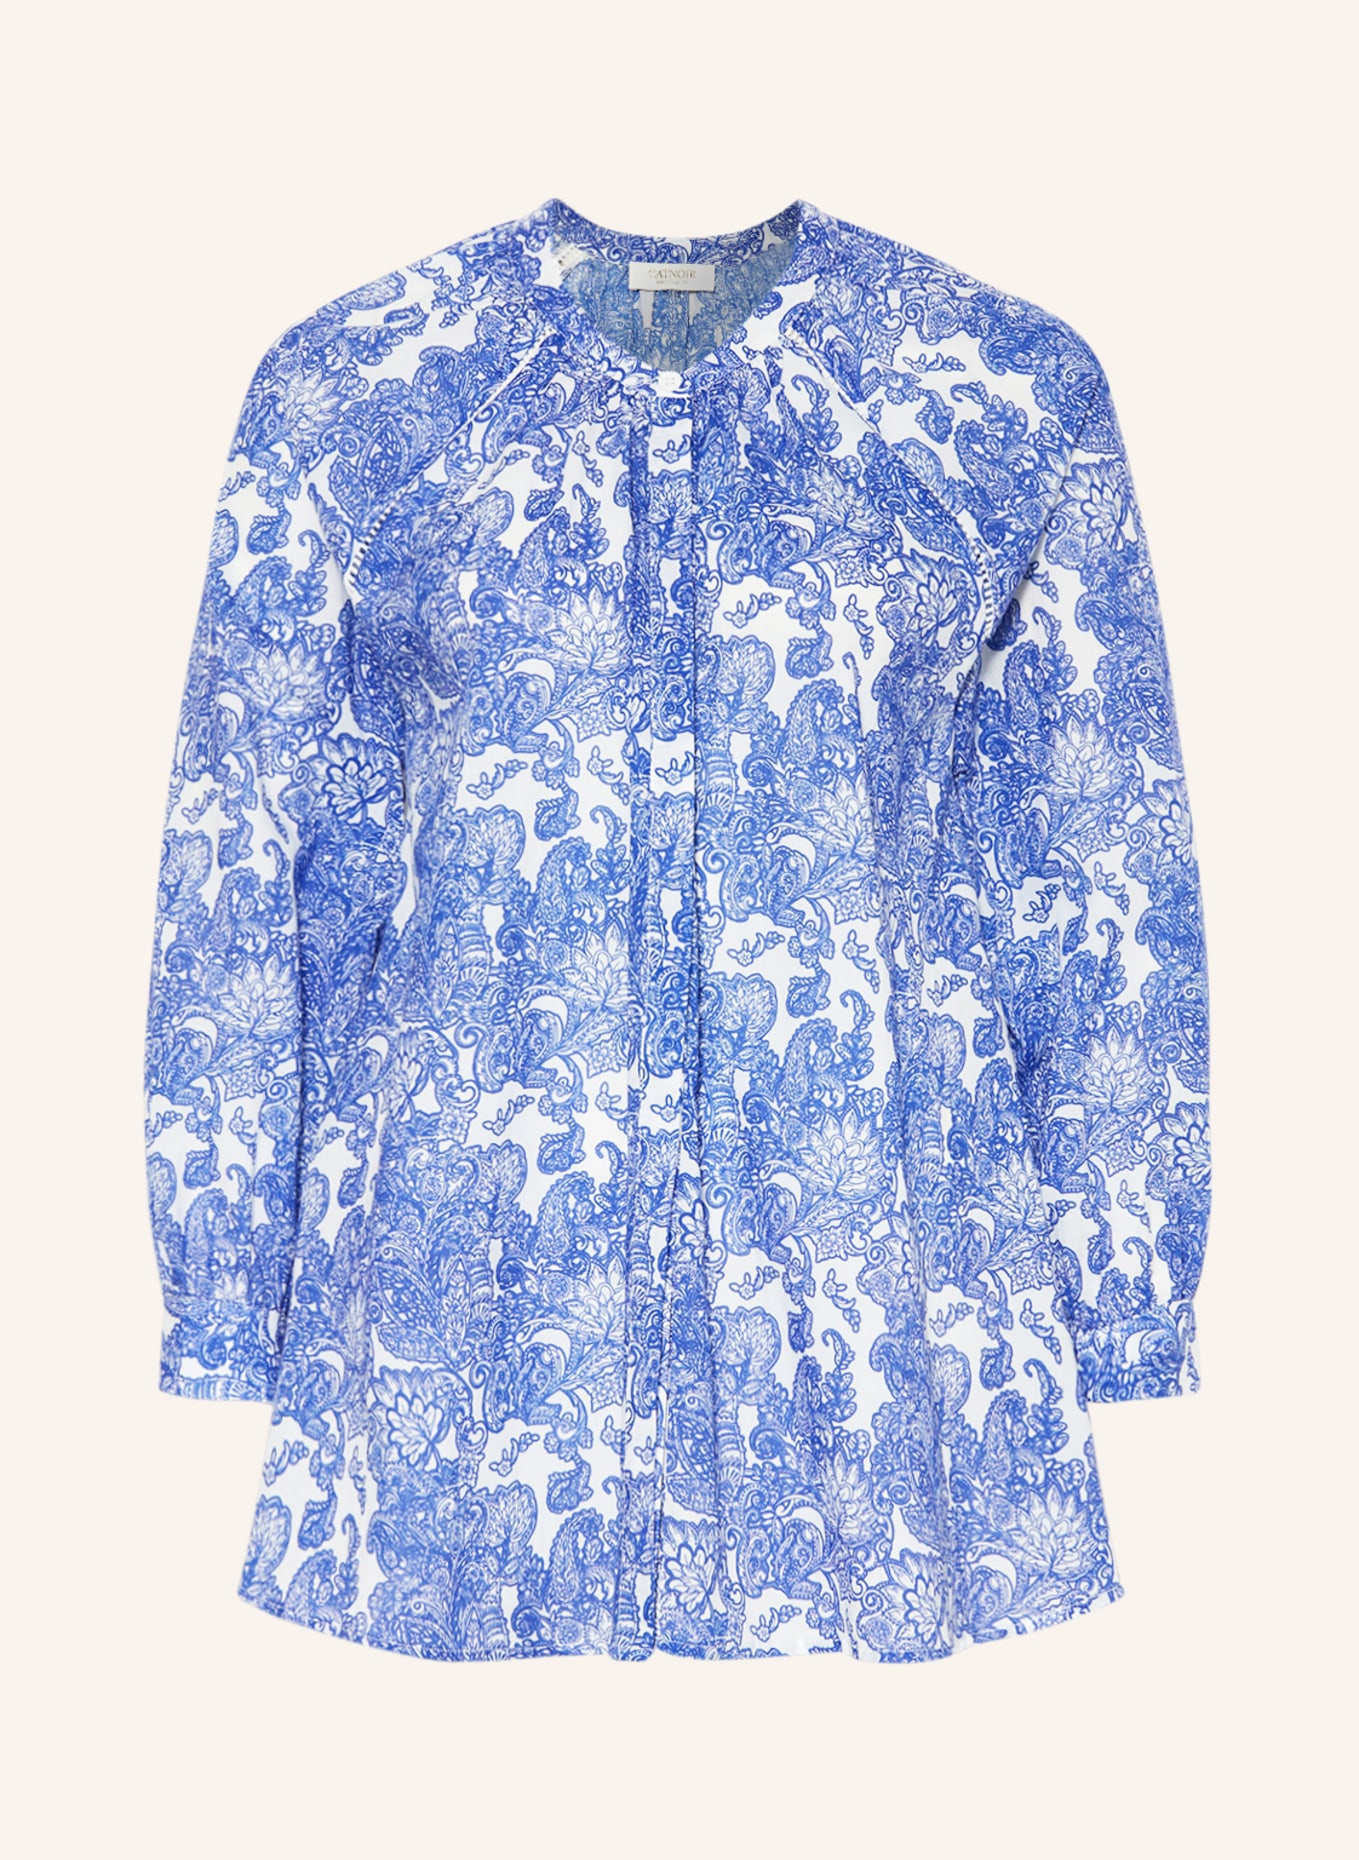 CATNOIR Bluse, Farbe: WEISS/ BLAU (Bild 1)